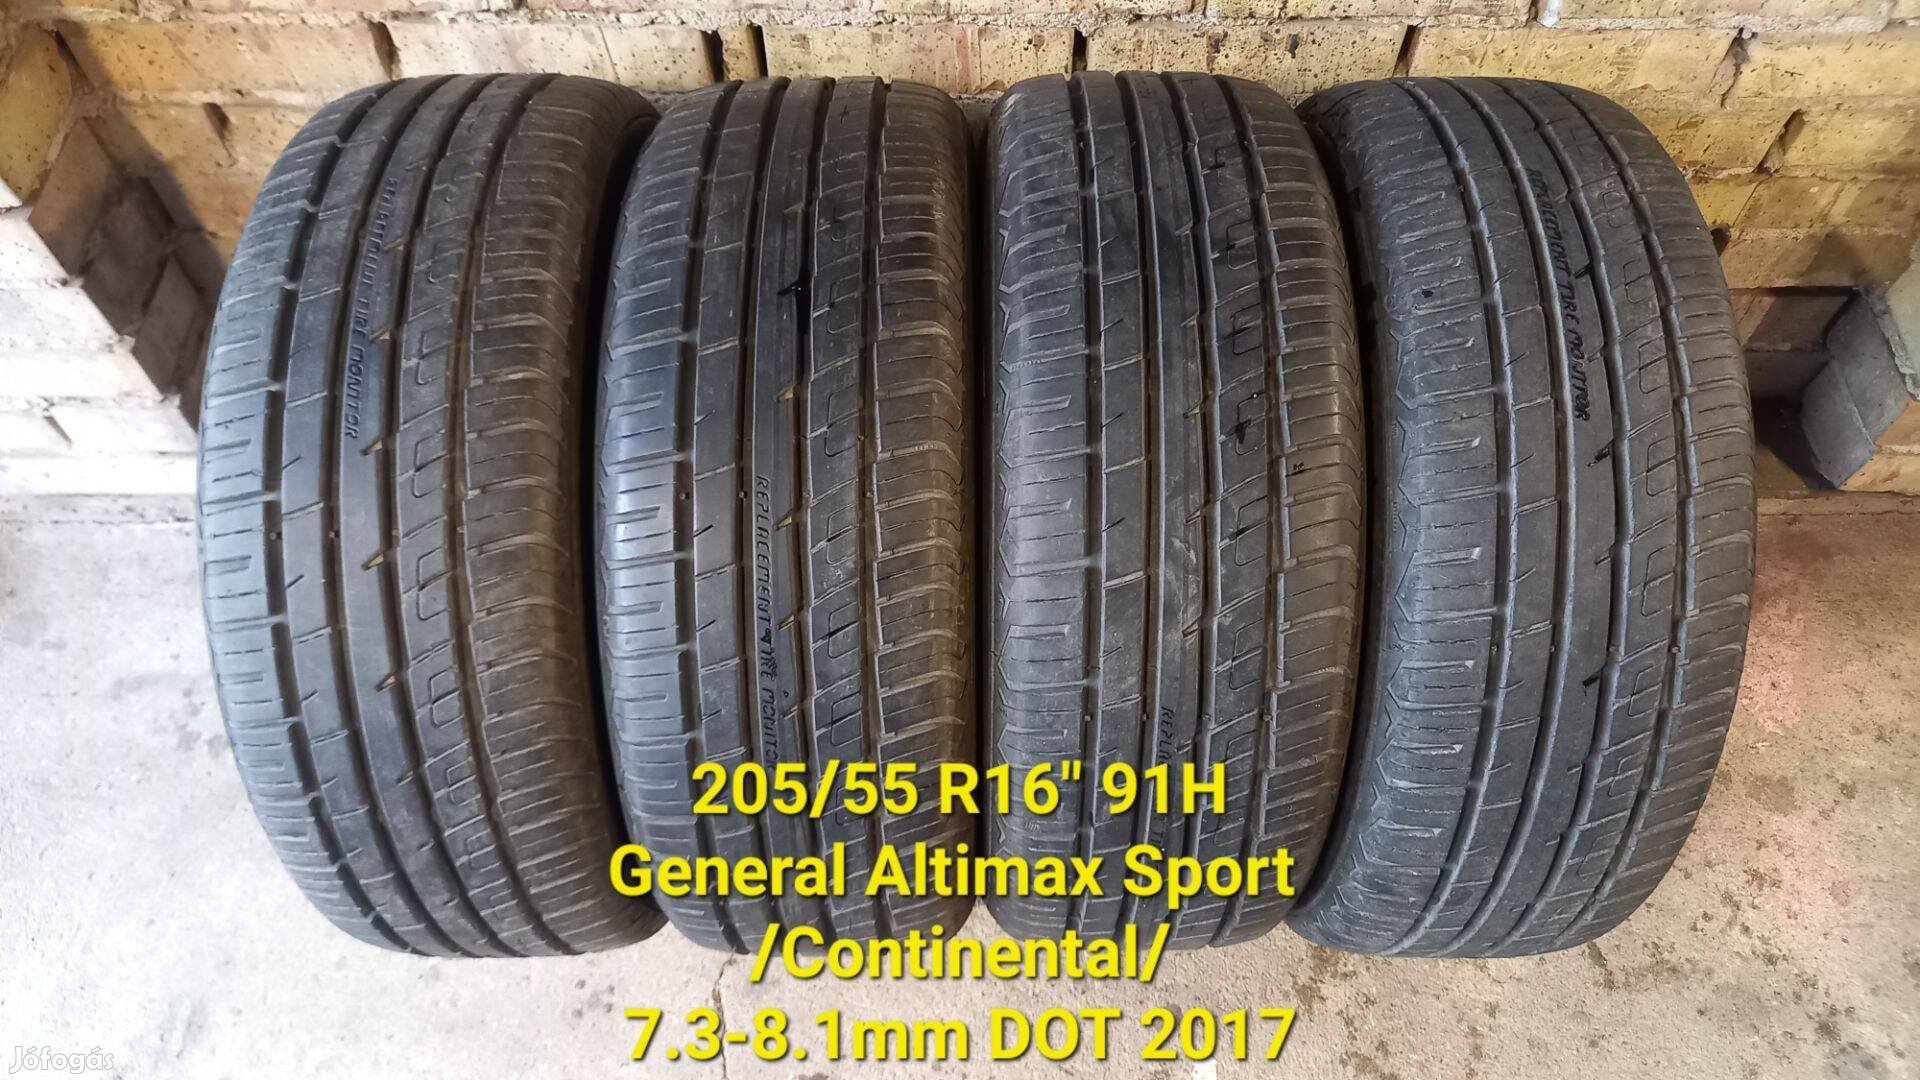 4db 205/55 R16" General Altimax Sport nyári abroncs /Continental/